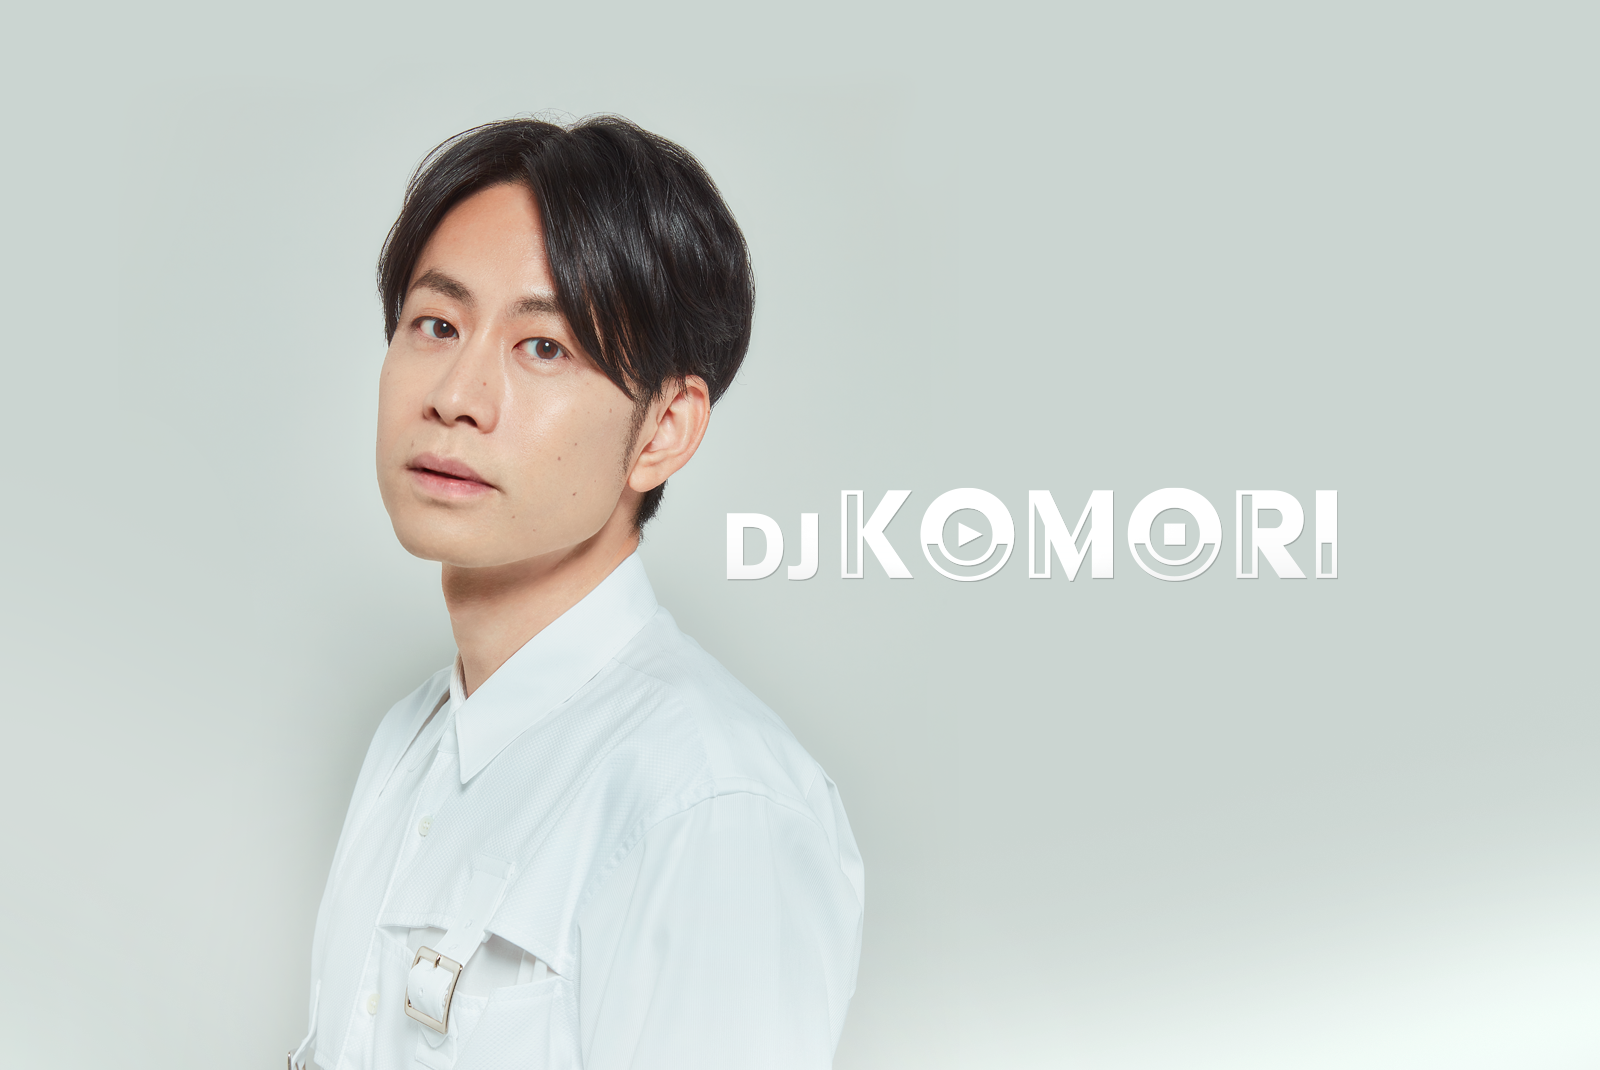 VIDEOS | DJ KOMORI Official